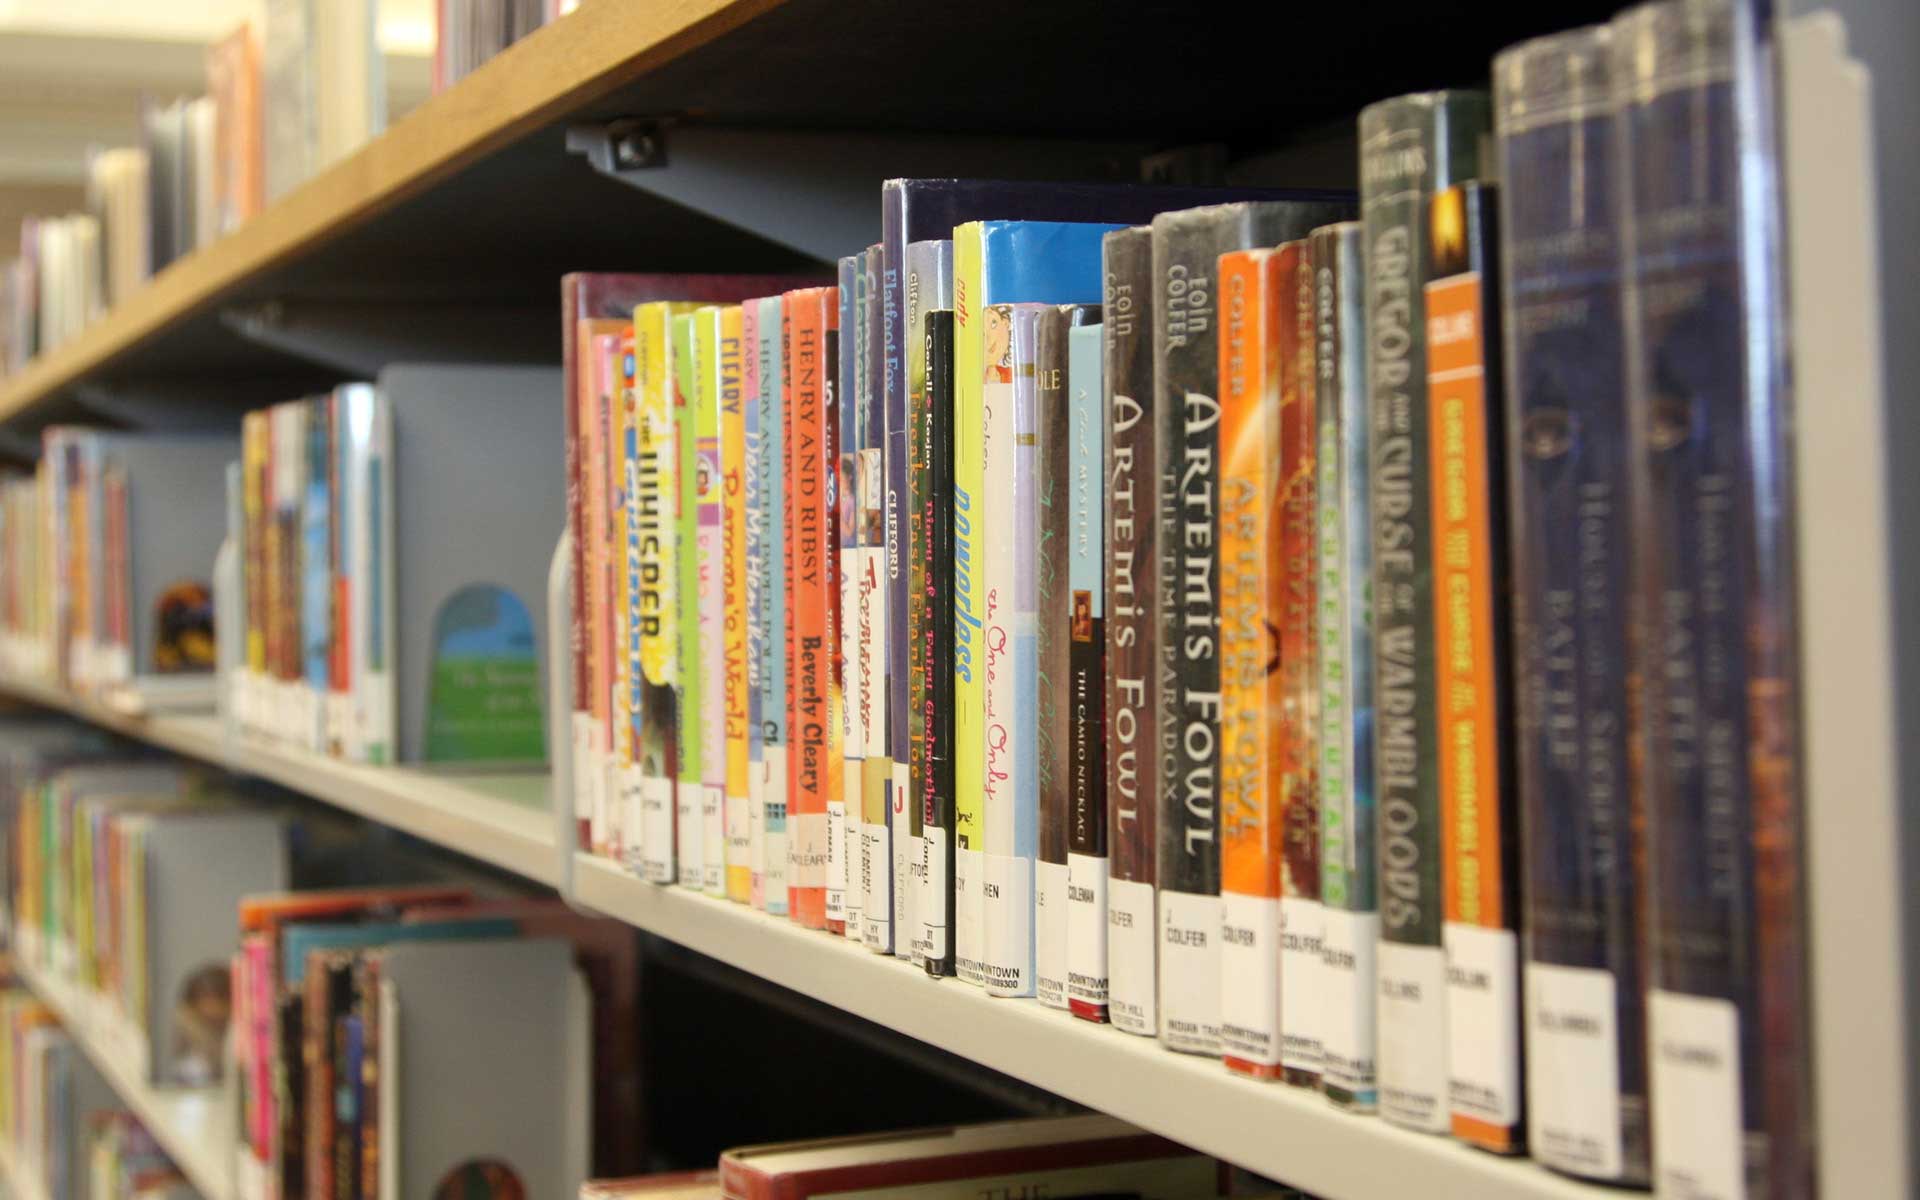 Nearly 000 take on the Library's Summer Reading challenge of Spokane, Washington